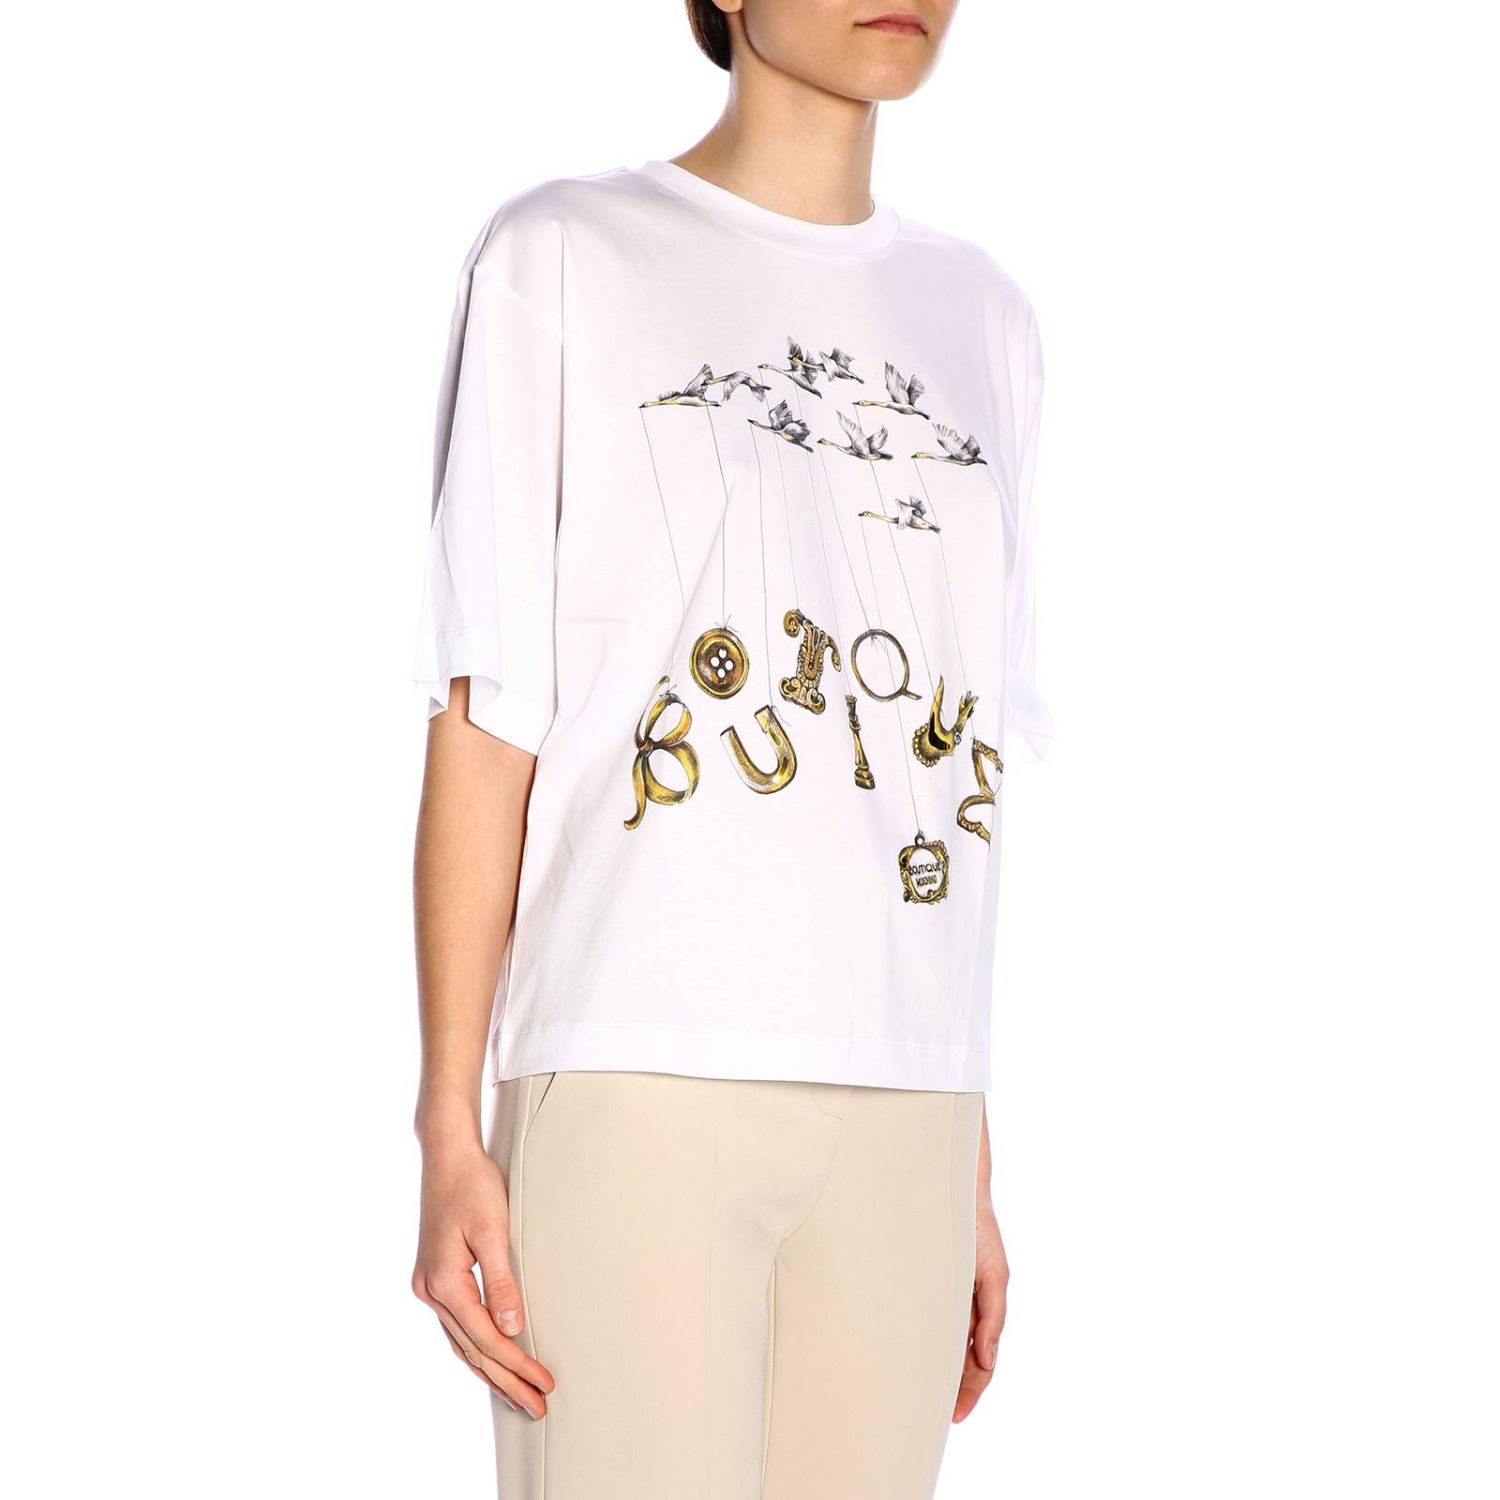 Boutique Moschino Outlet: T-shirt women | T-Shirt Boutique Moschino ...